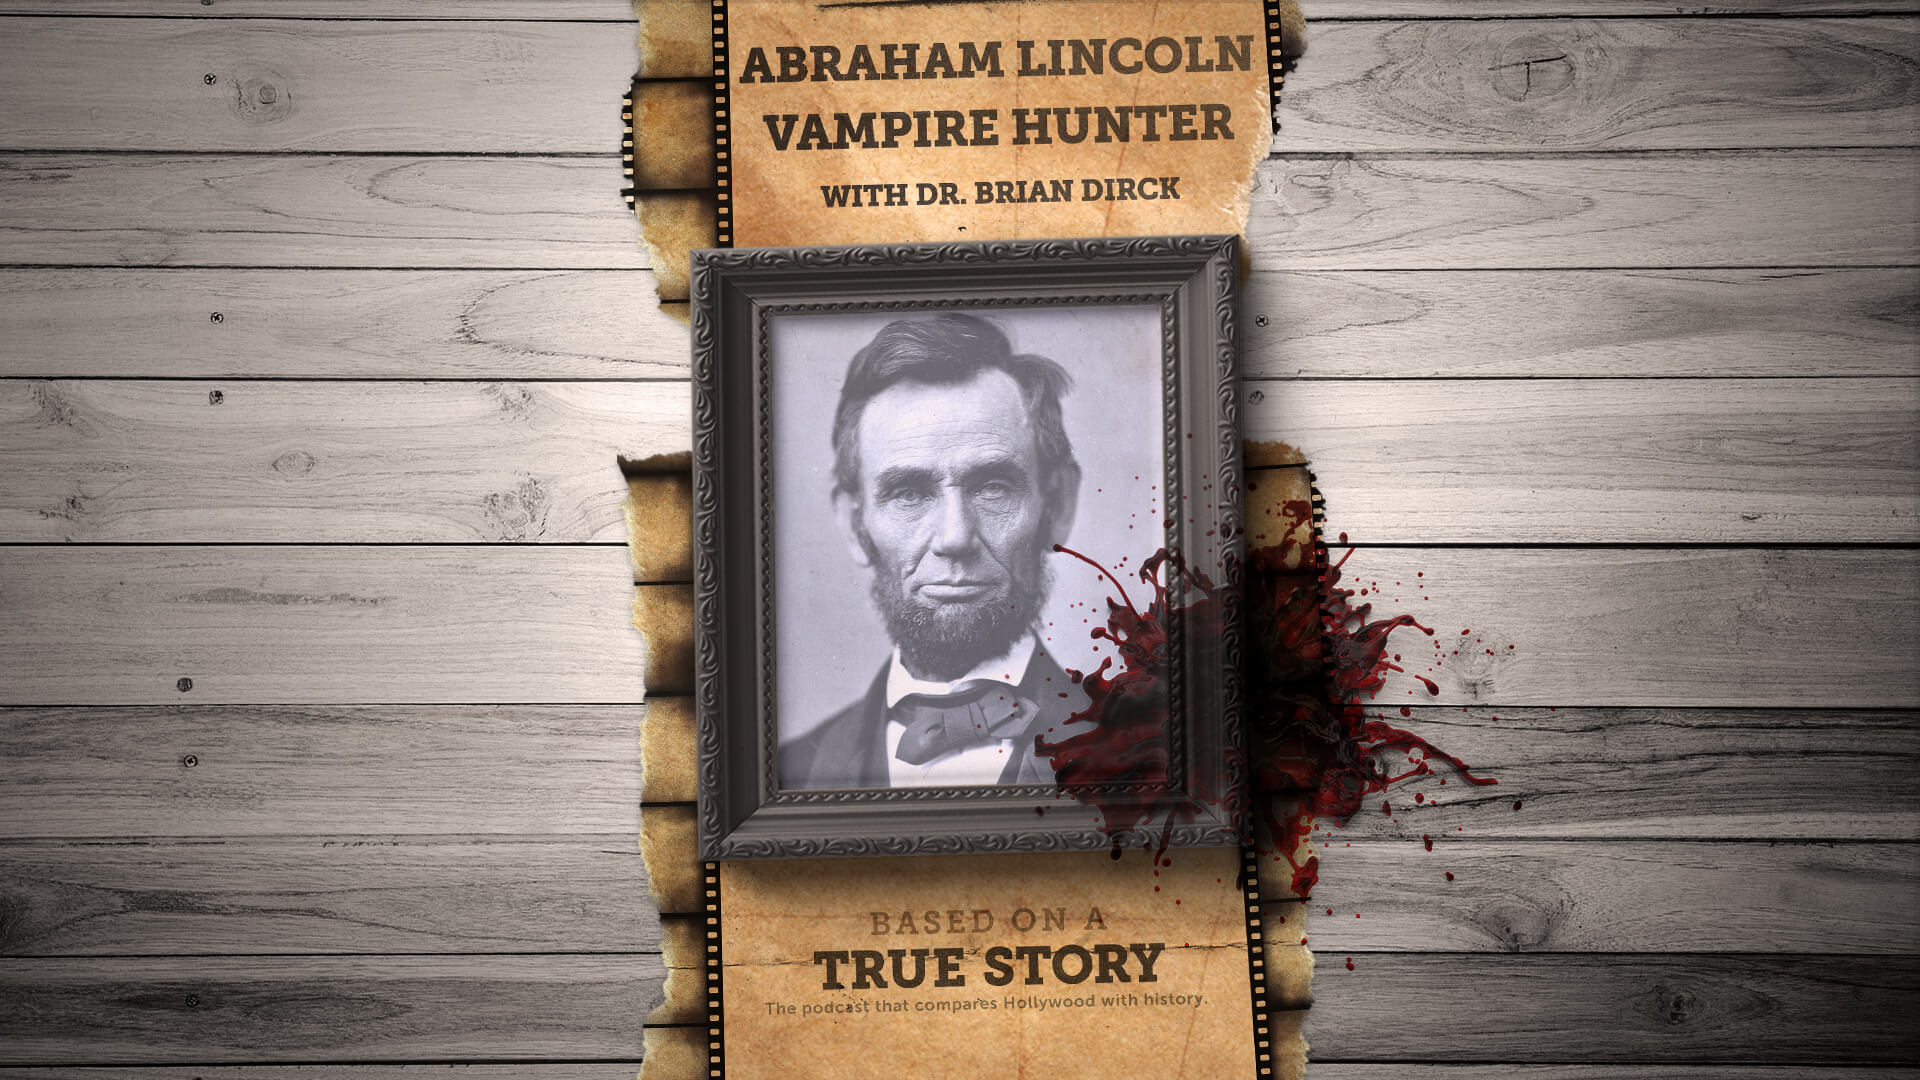 199: Abraham Lincoln: Vampire Hunter with Dr. Brian Dirck